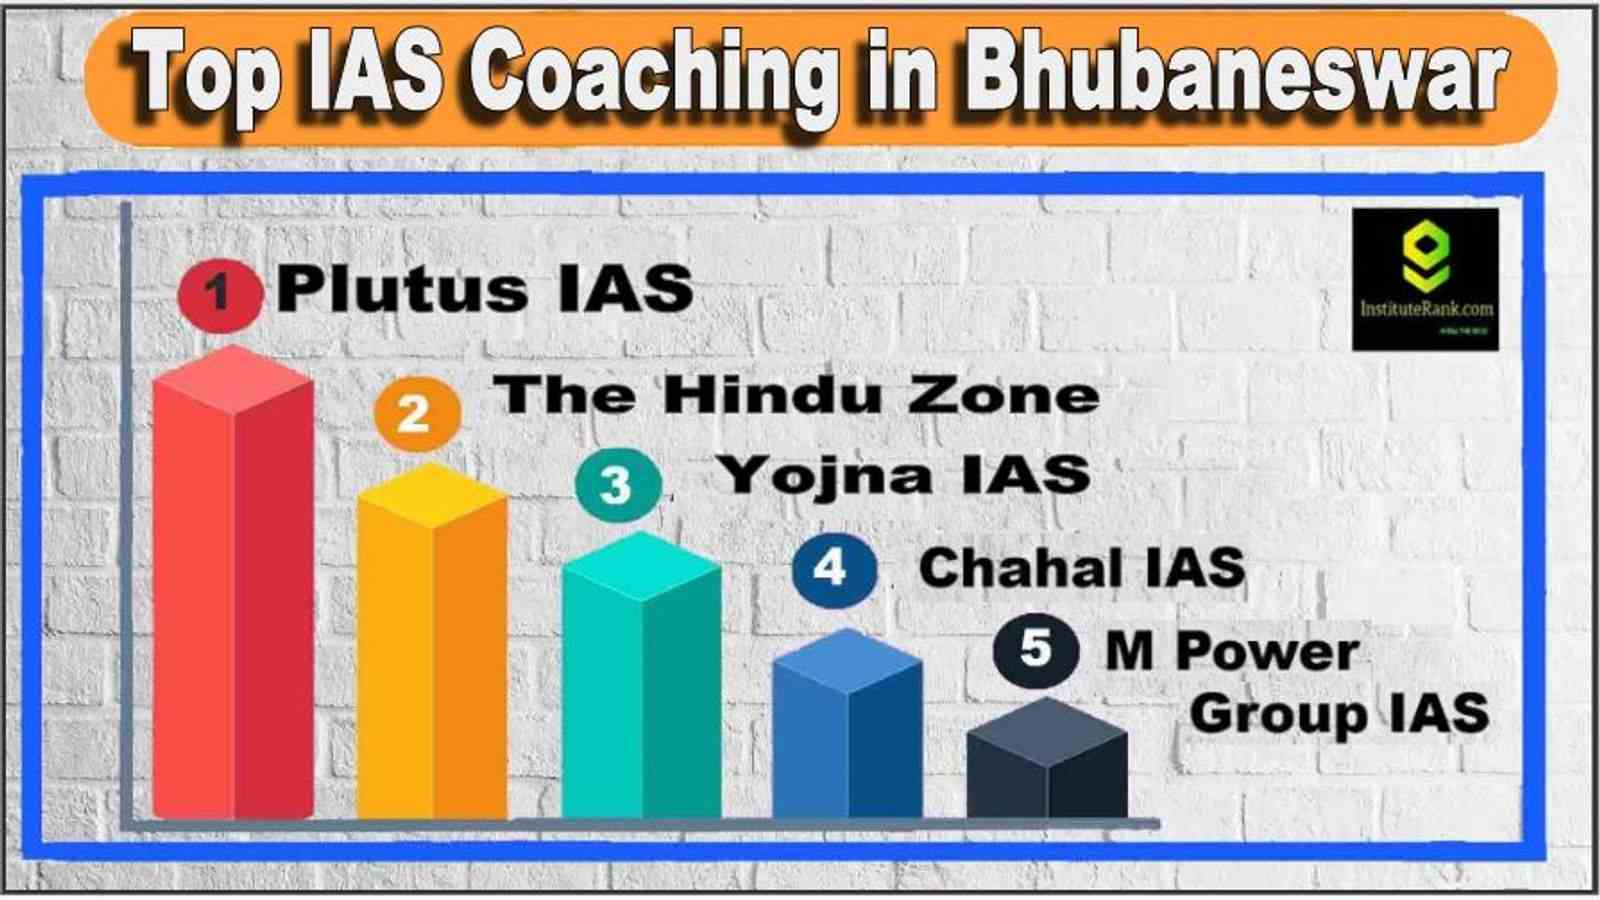 Top 10 IAS Coaching in Bhubaneswar